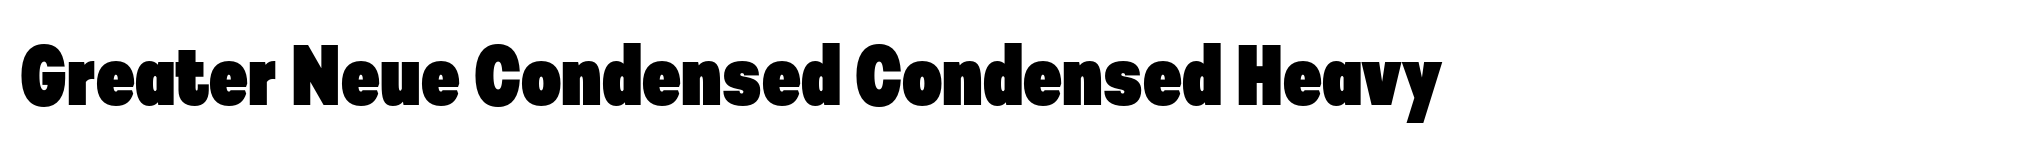 Greater Neue Condensed Condensed Heavy image